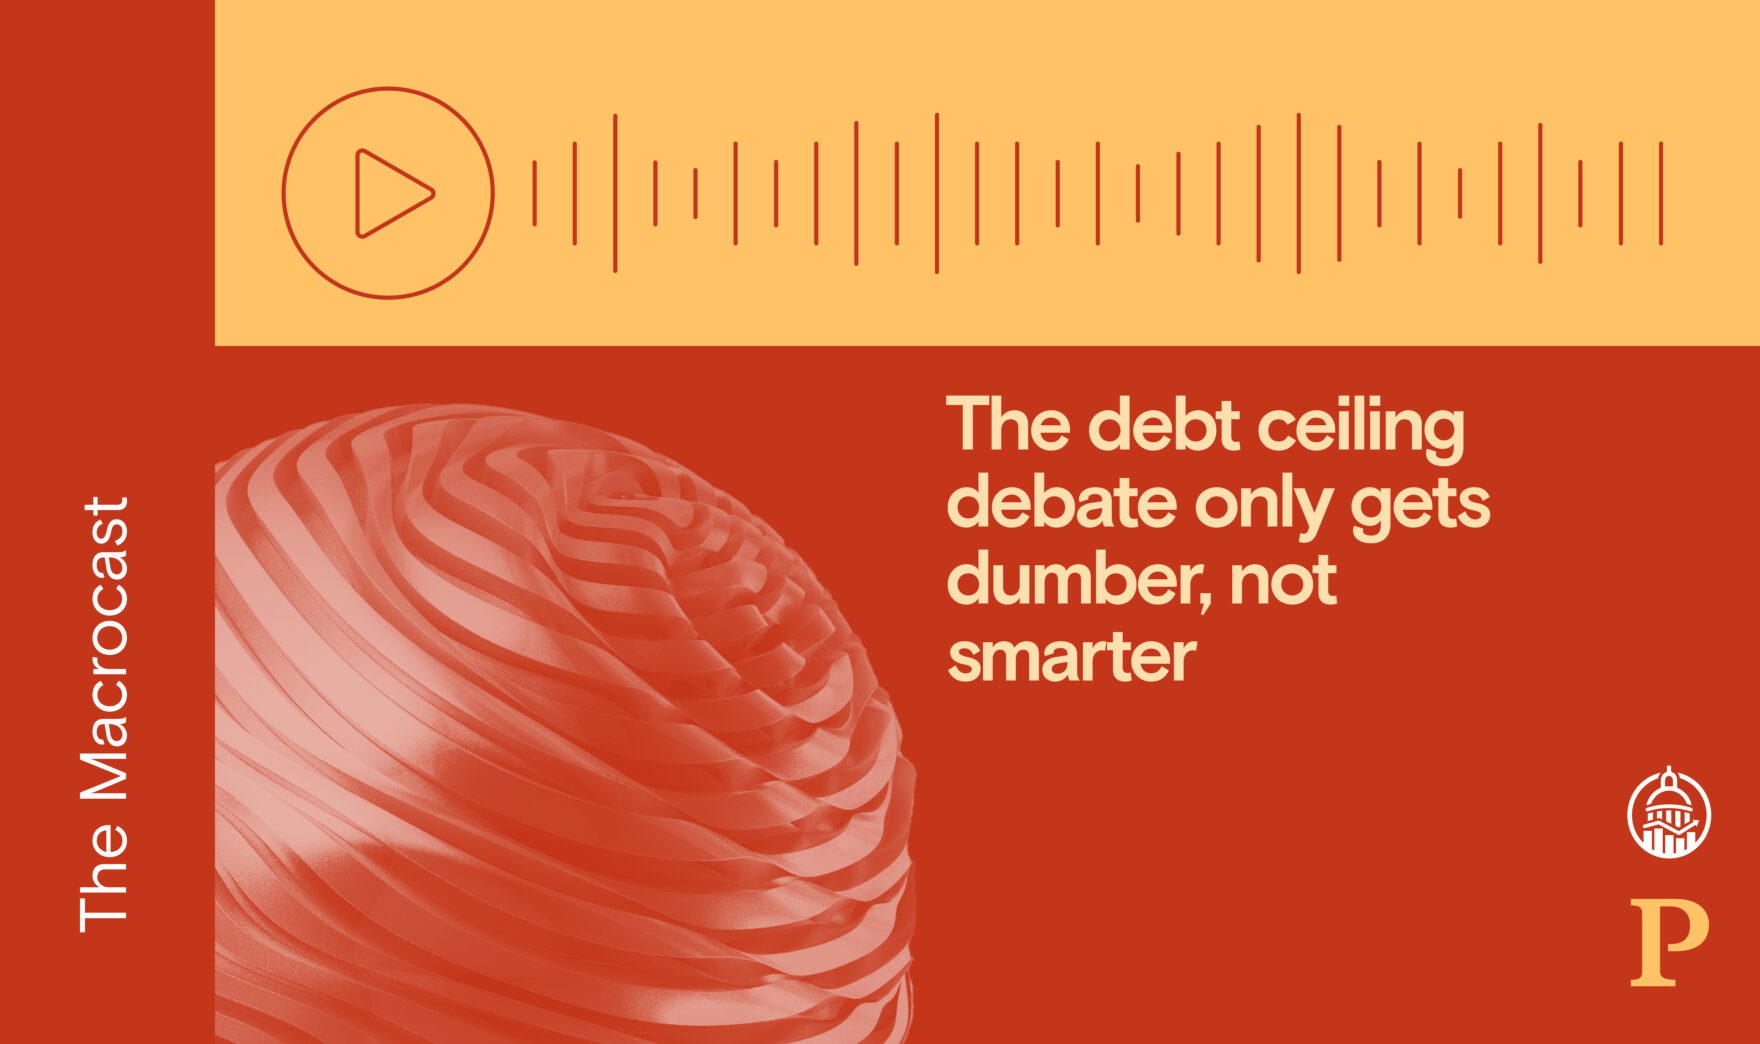 Macrocast: The debt ceiling debate only gets dumber, not smarter